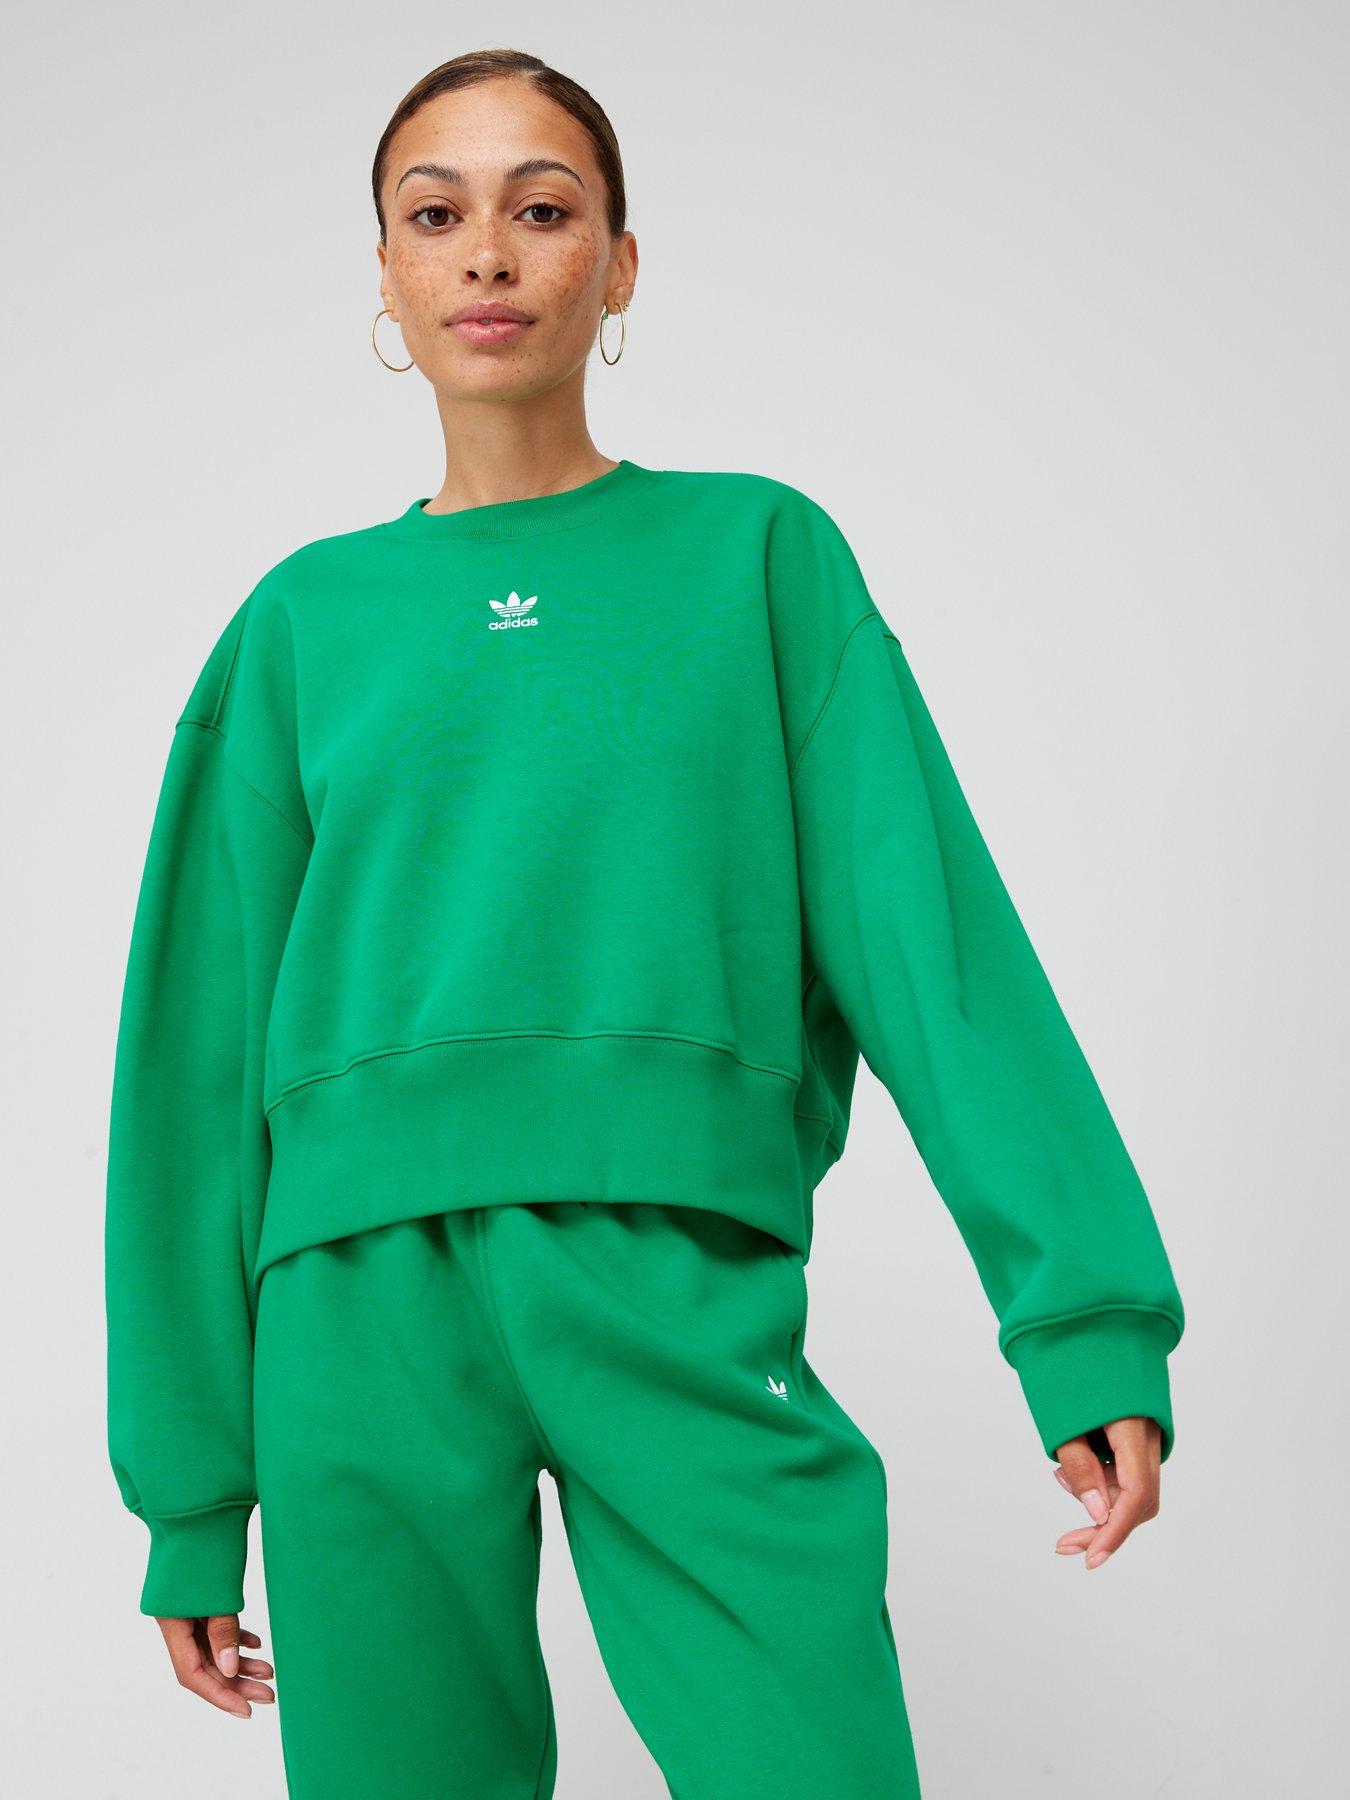 adidas Originals Sweatshirt - Green, Green, Size S, Women